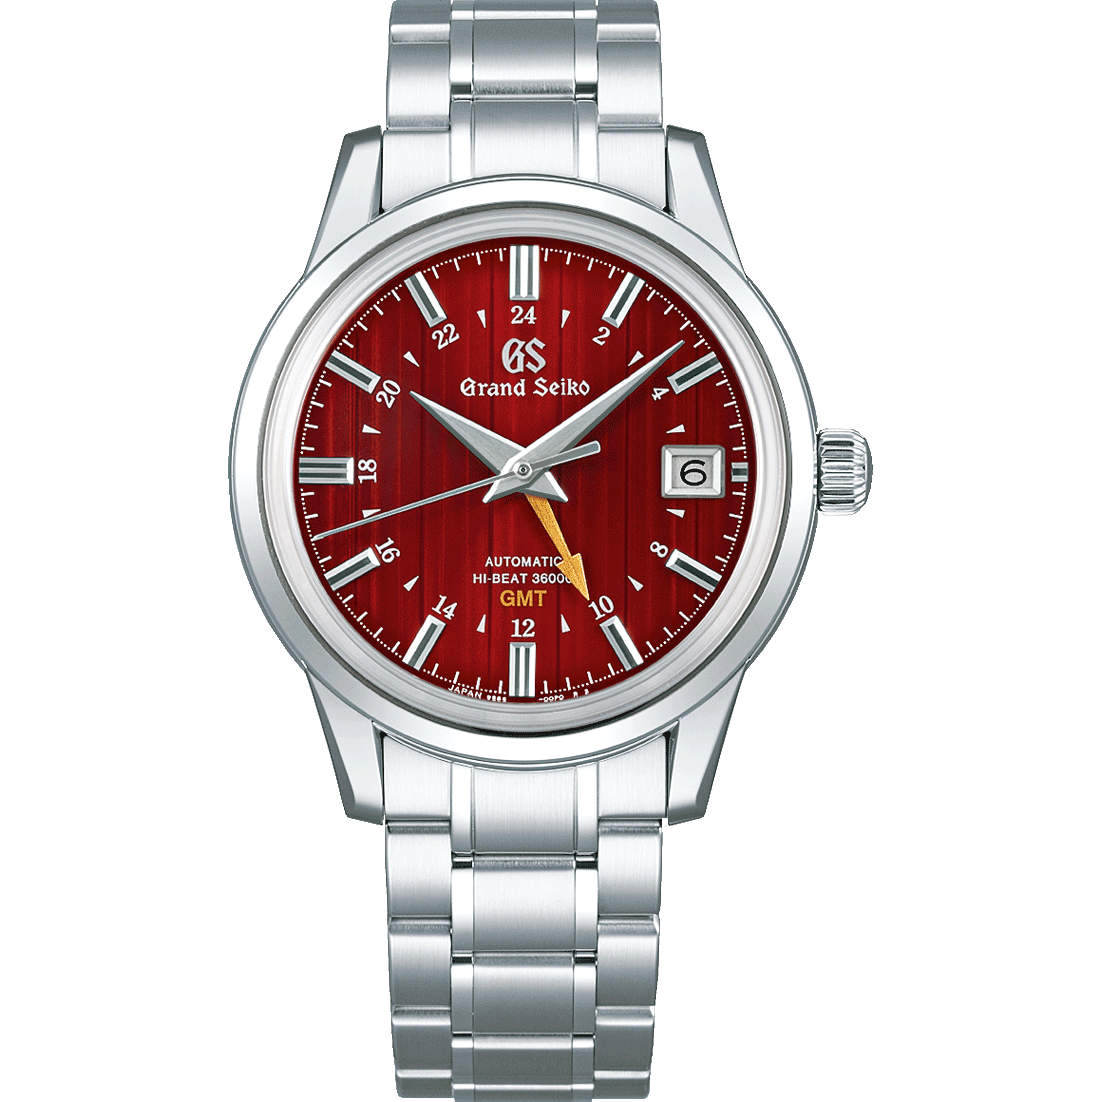 Grand Seiko SBGJ273 red dial watch.